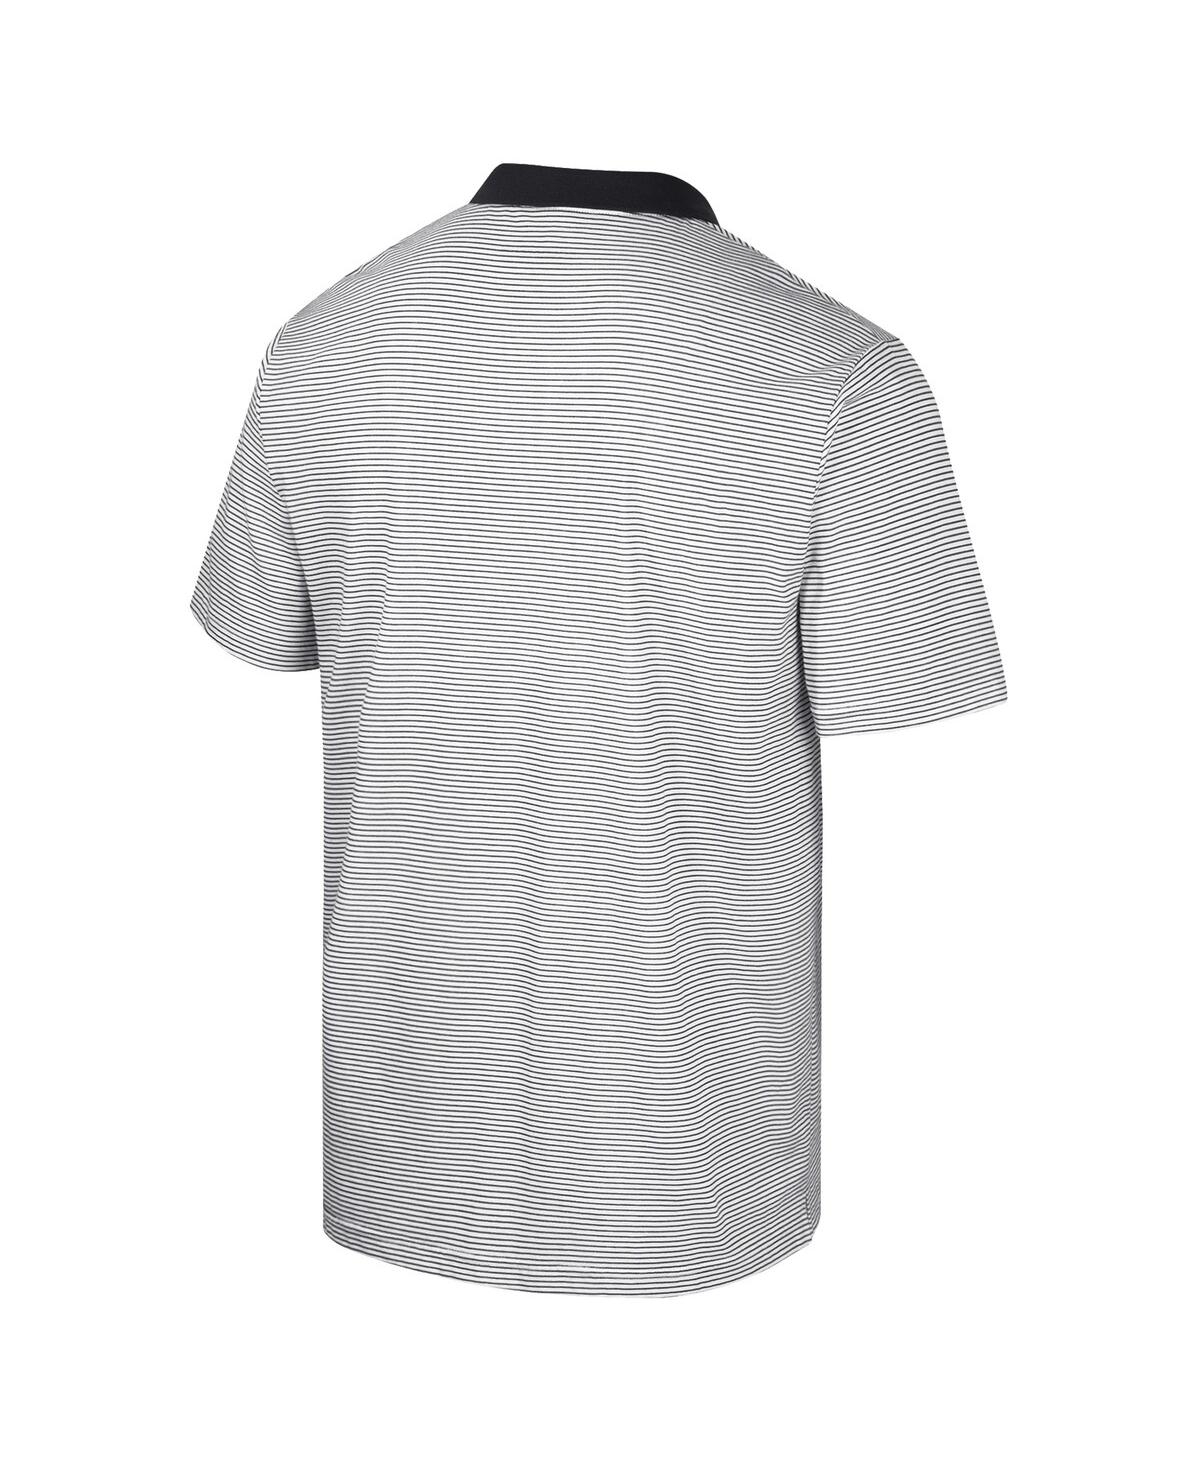 Shop Colosseum Men's  White Boston College Eagles Print Stripe Polo Shirt